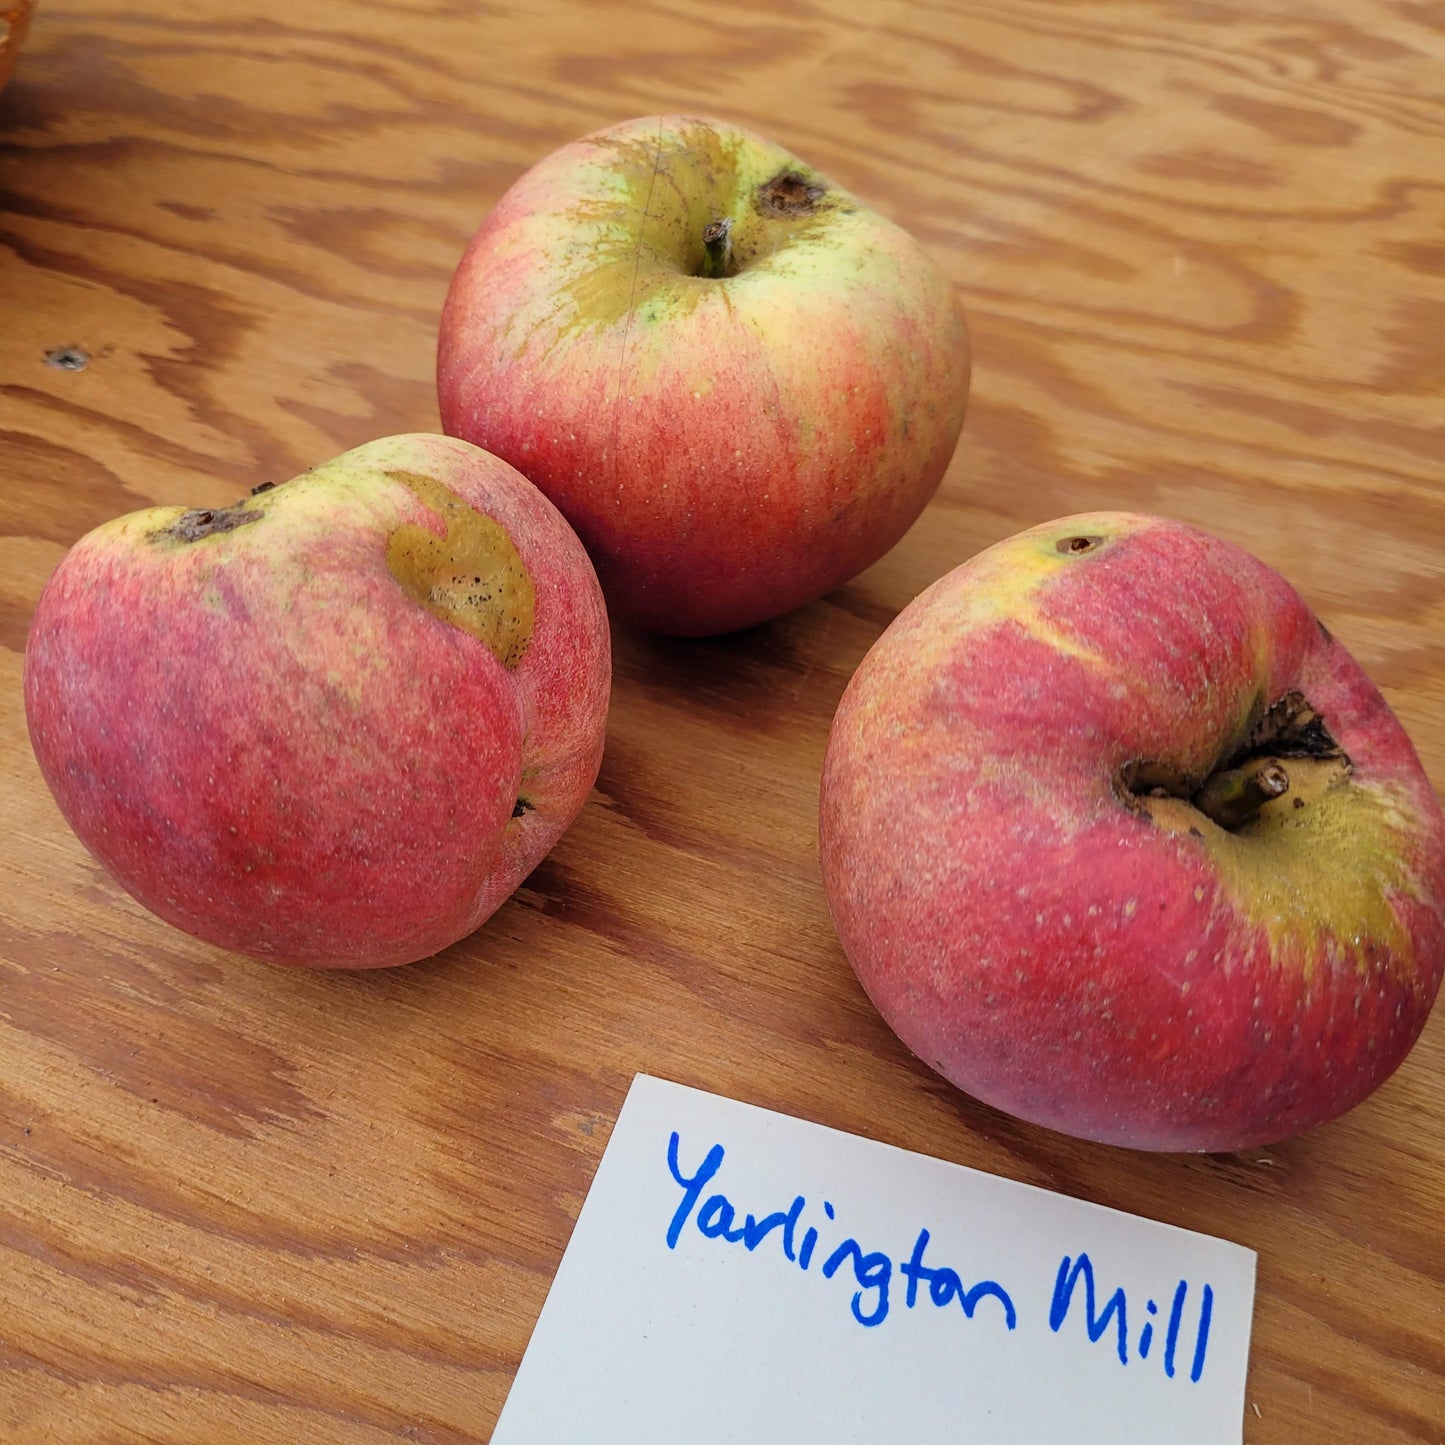 Yarlington Mill Apple